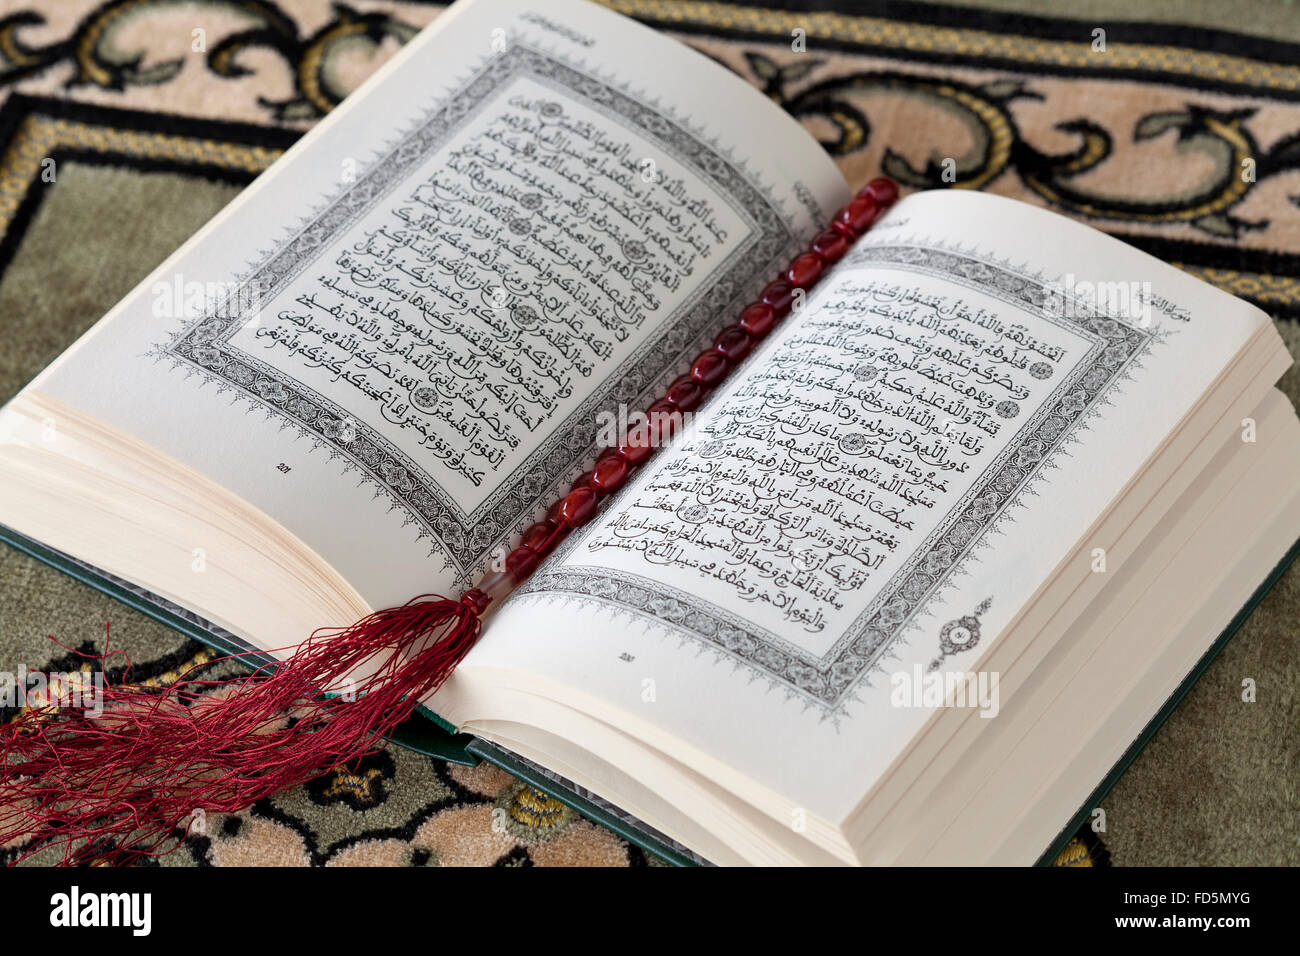 Open Koran book and the prayer beads on a carpet Stock Photo